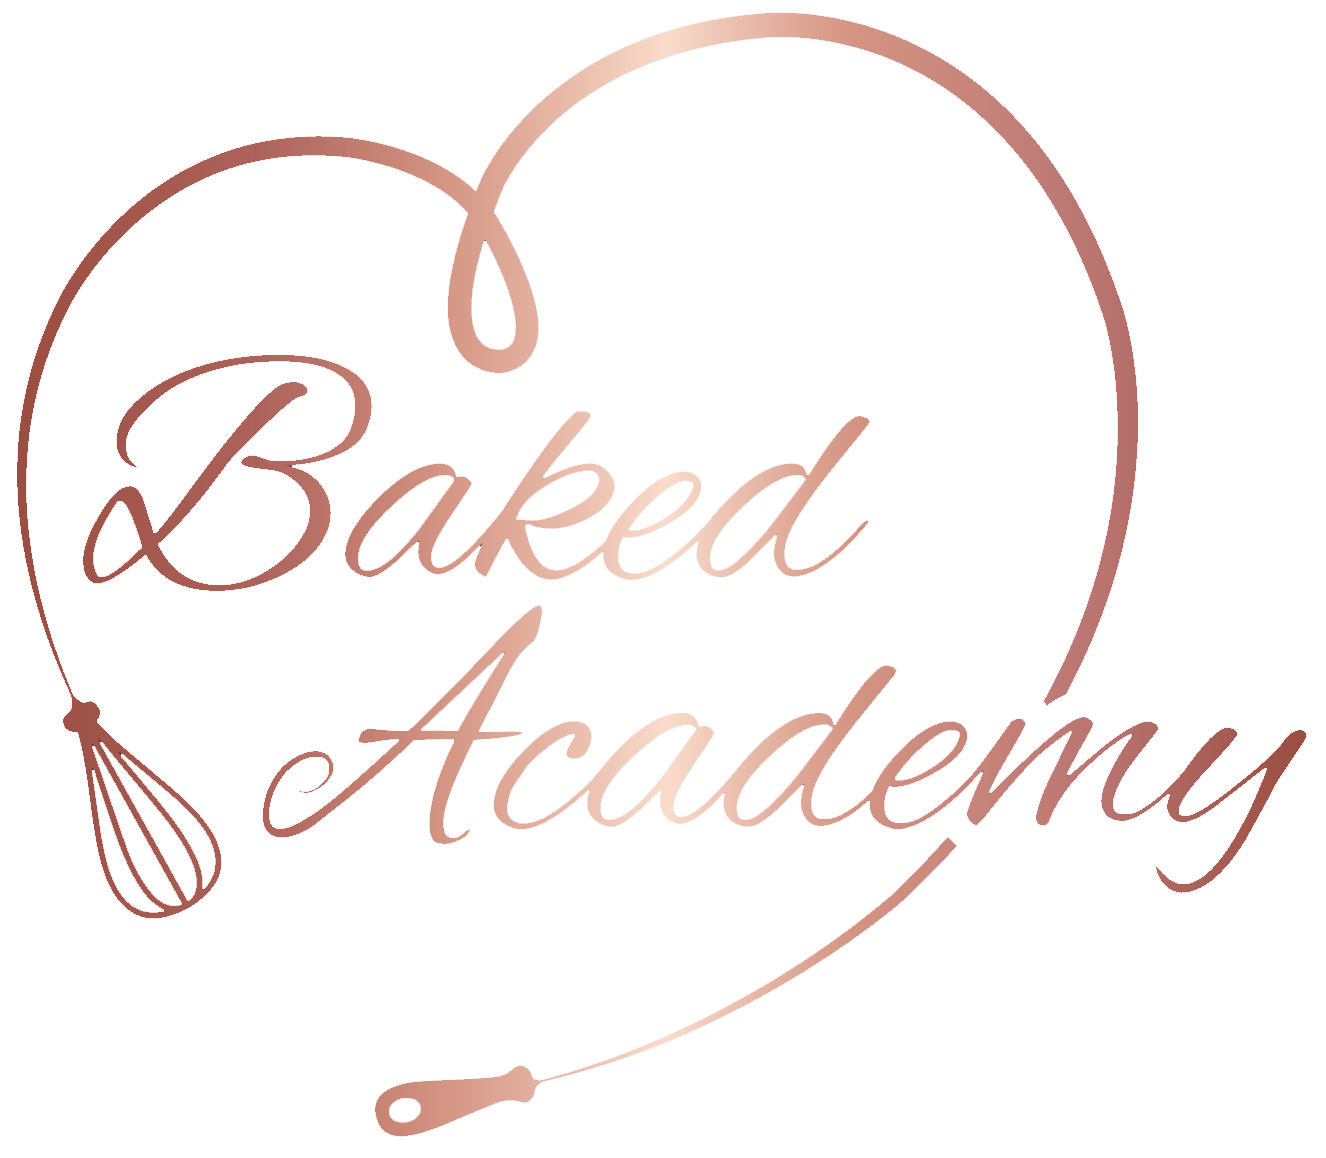 Baked Academy Trans logo